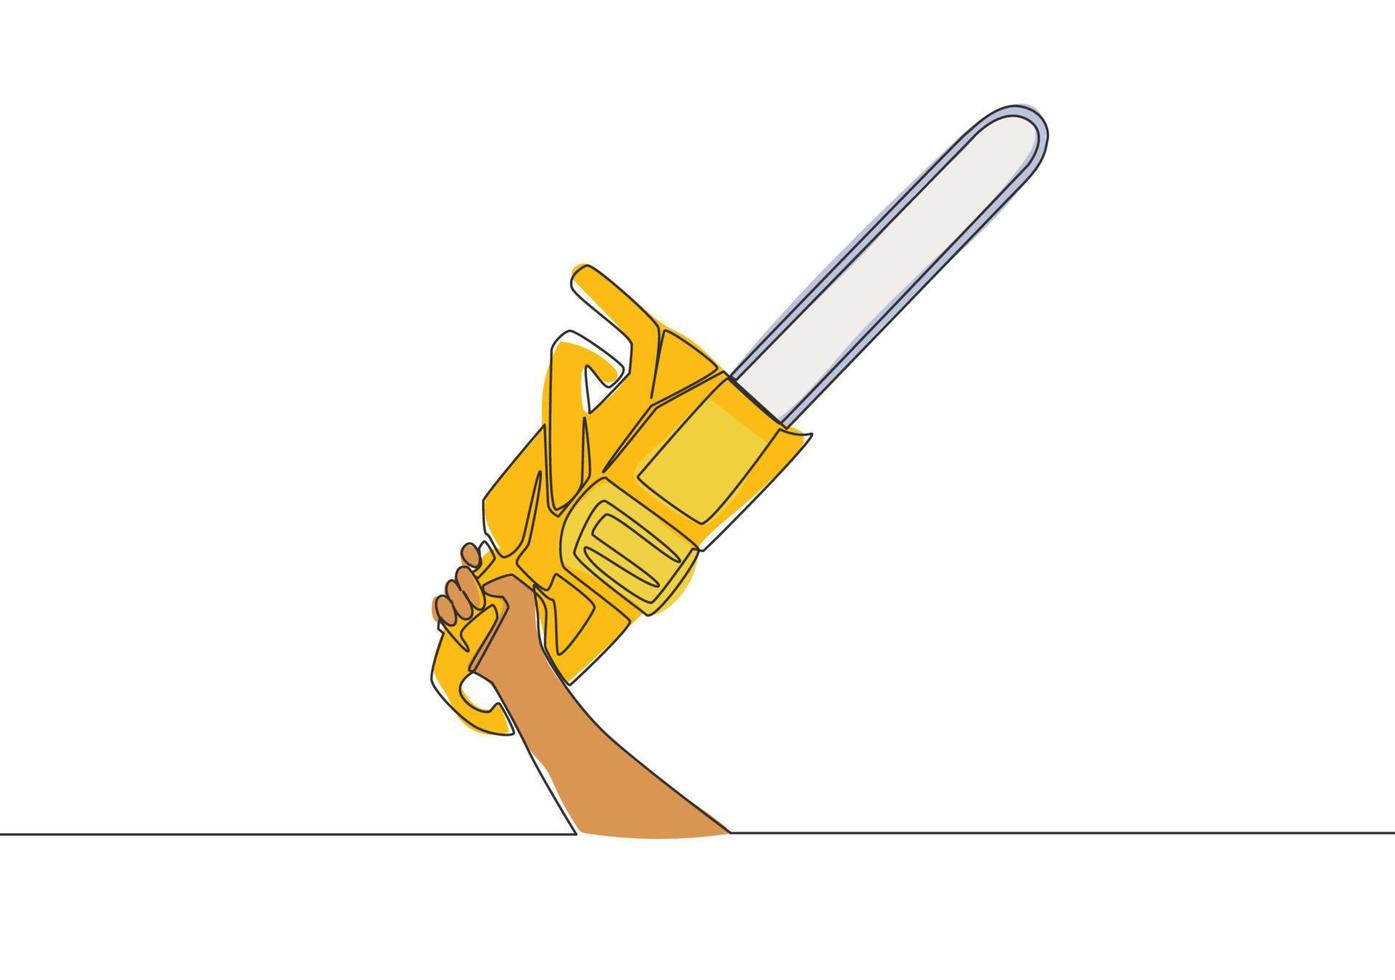 ett kontinuerlig linje teckning av man innehav motorsåg. snickare verktyg begrepp. enda linje dra vektor design illustration